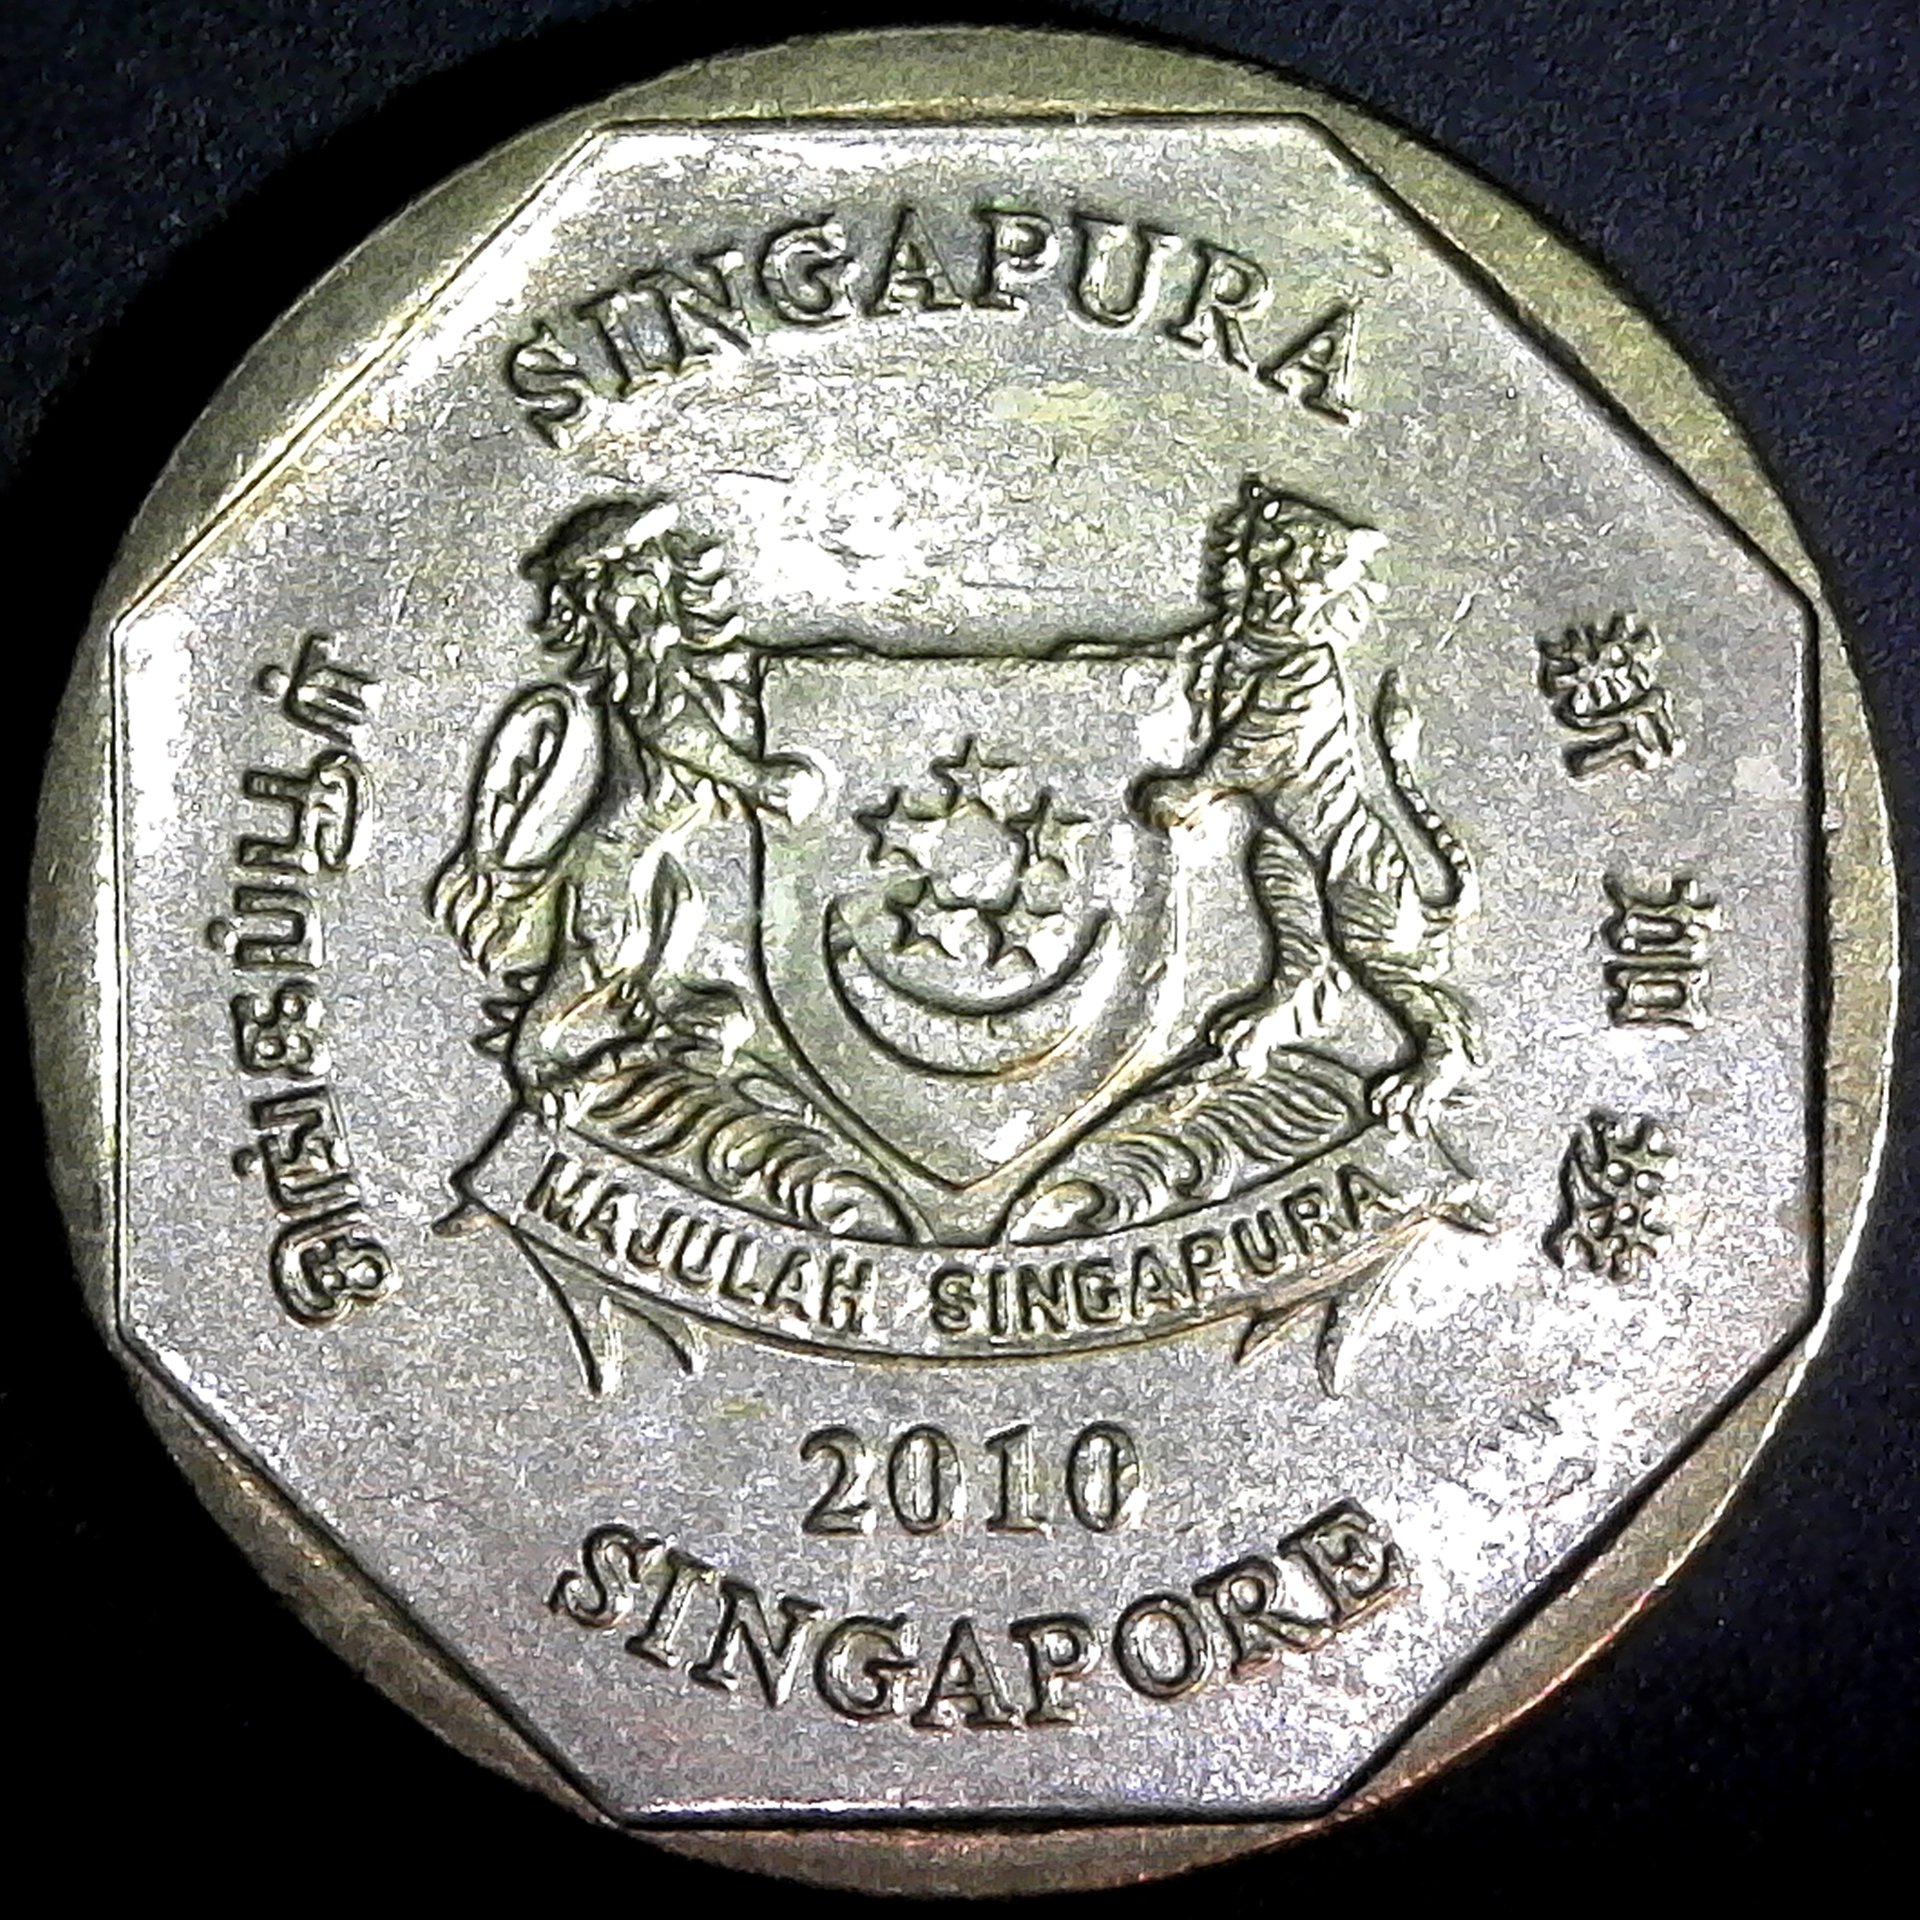 Singapore 1 Dollar 2010 obv.jpg